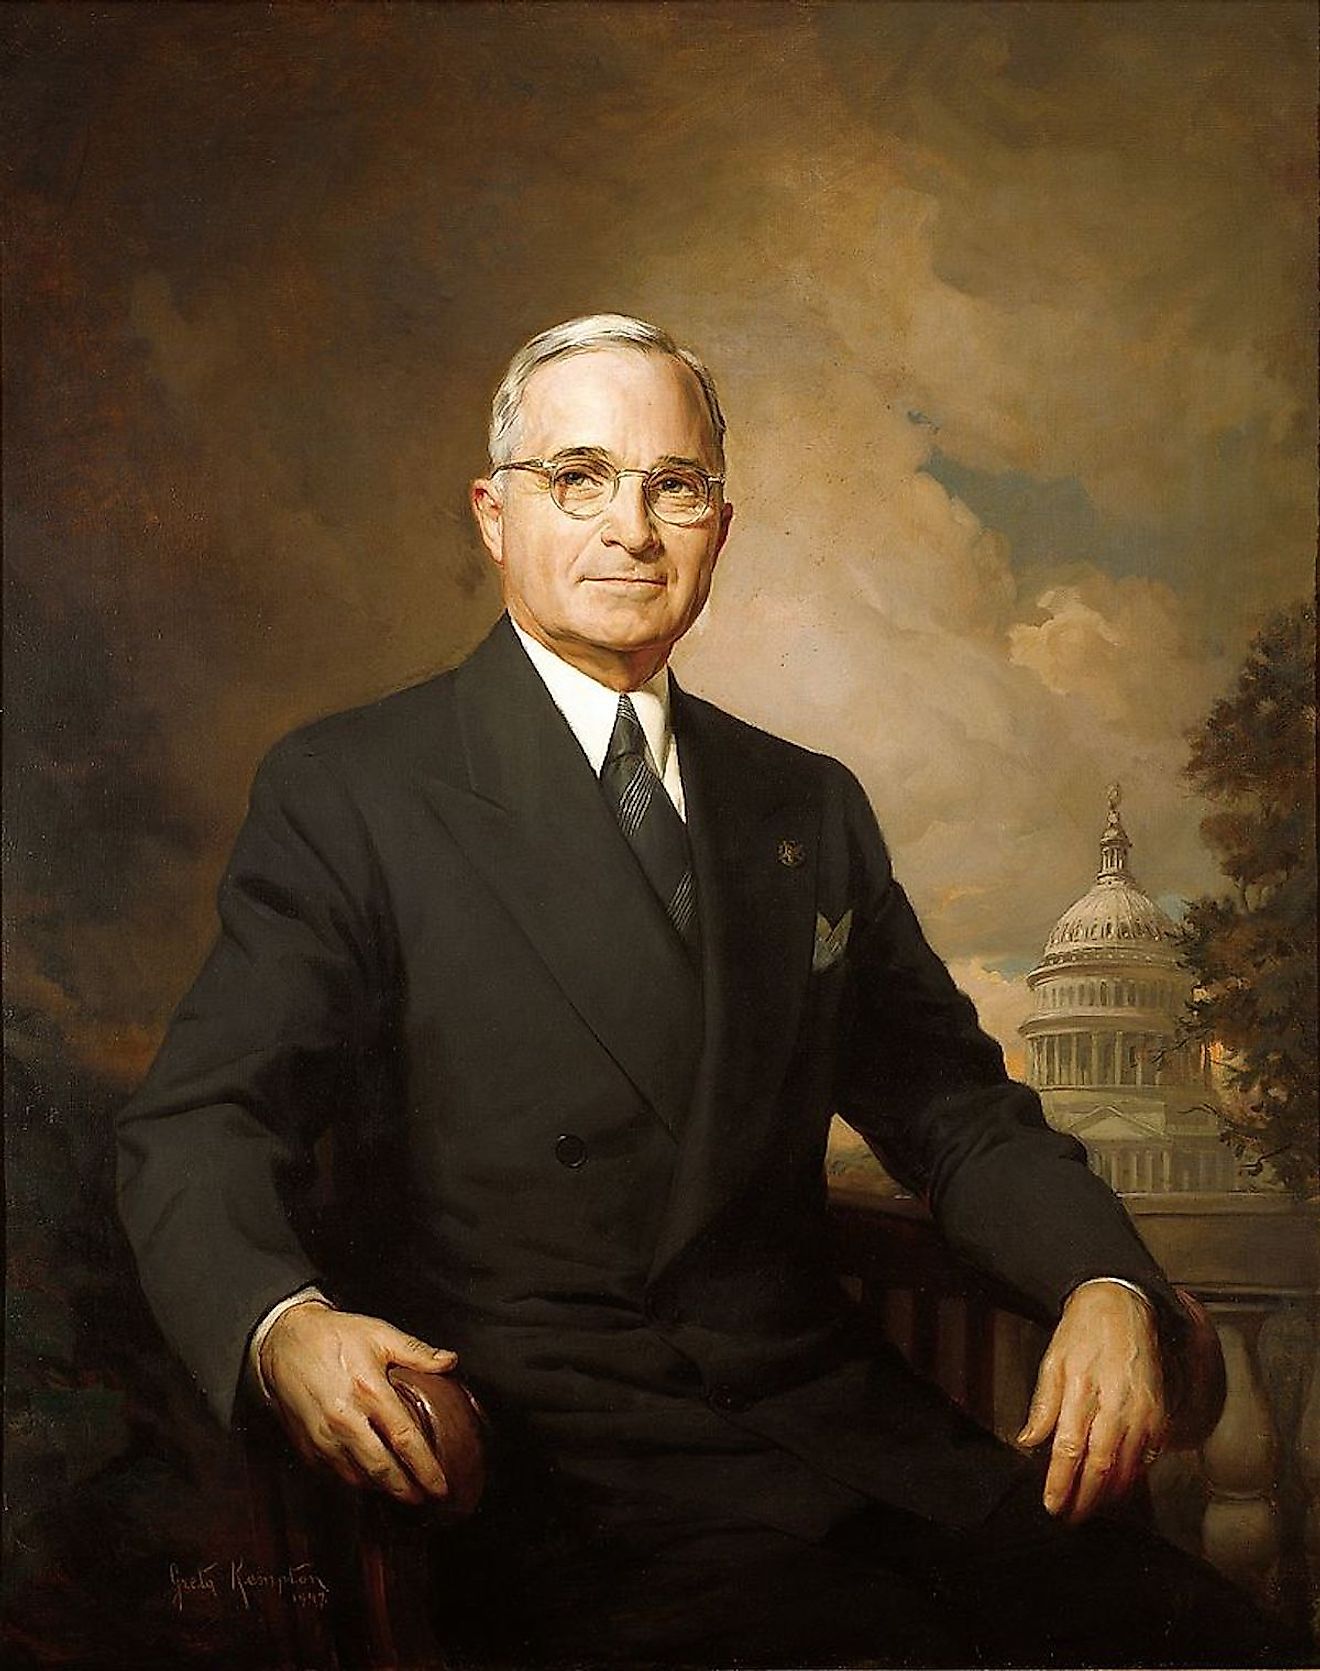 President Harry S. Truman. Image credit: Greta Kempton/Public domain